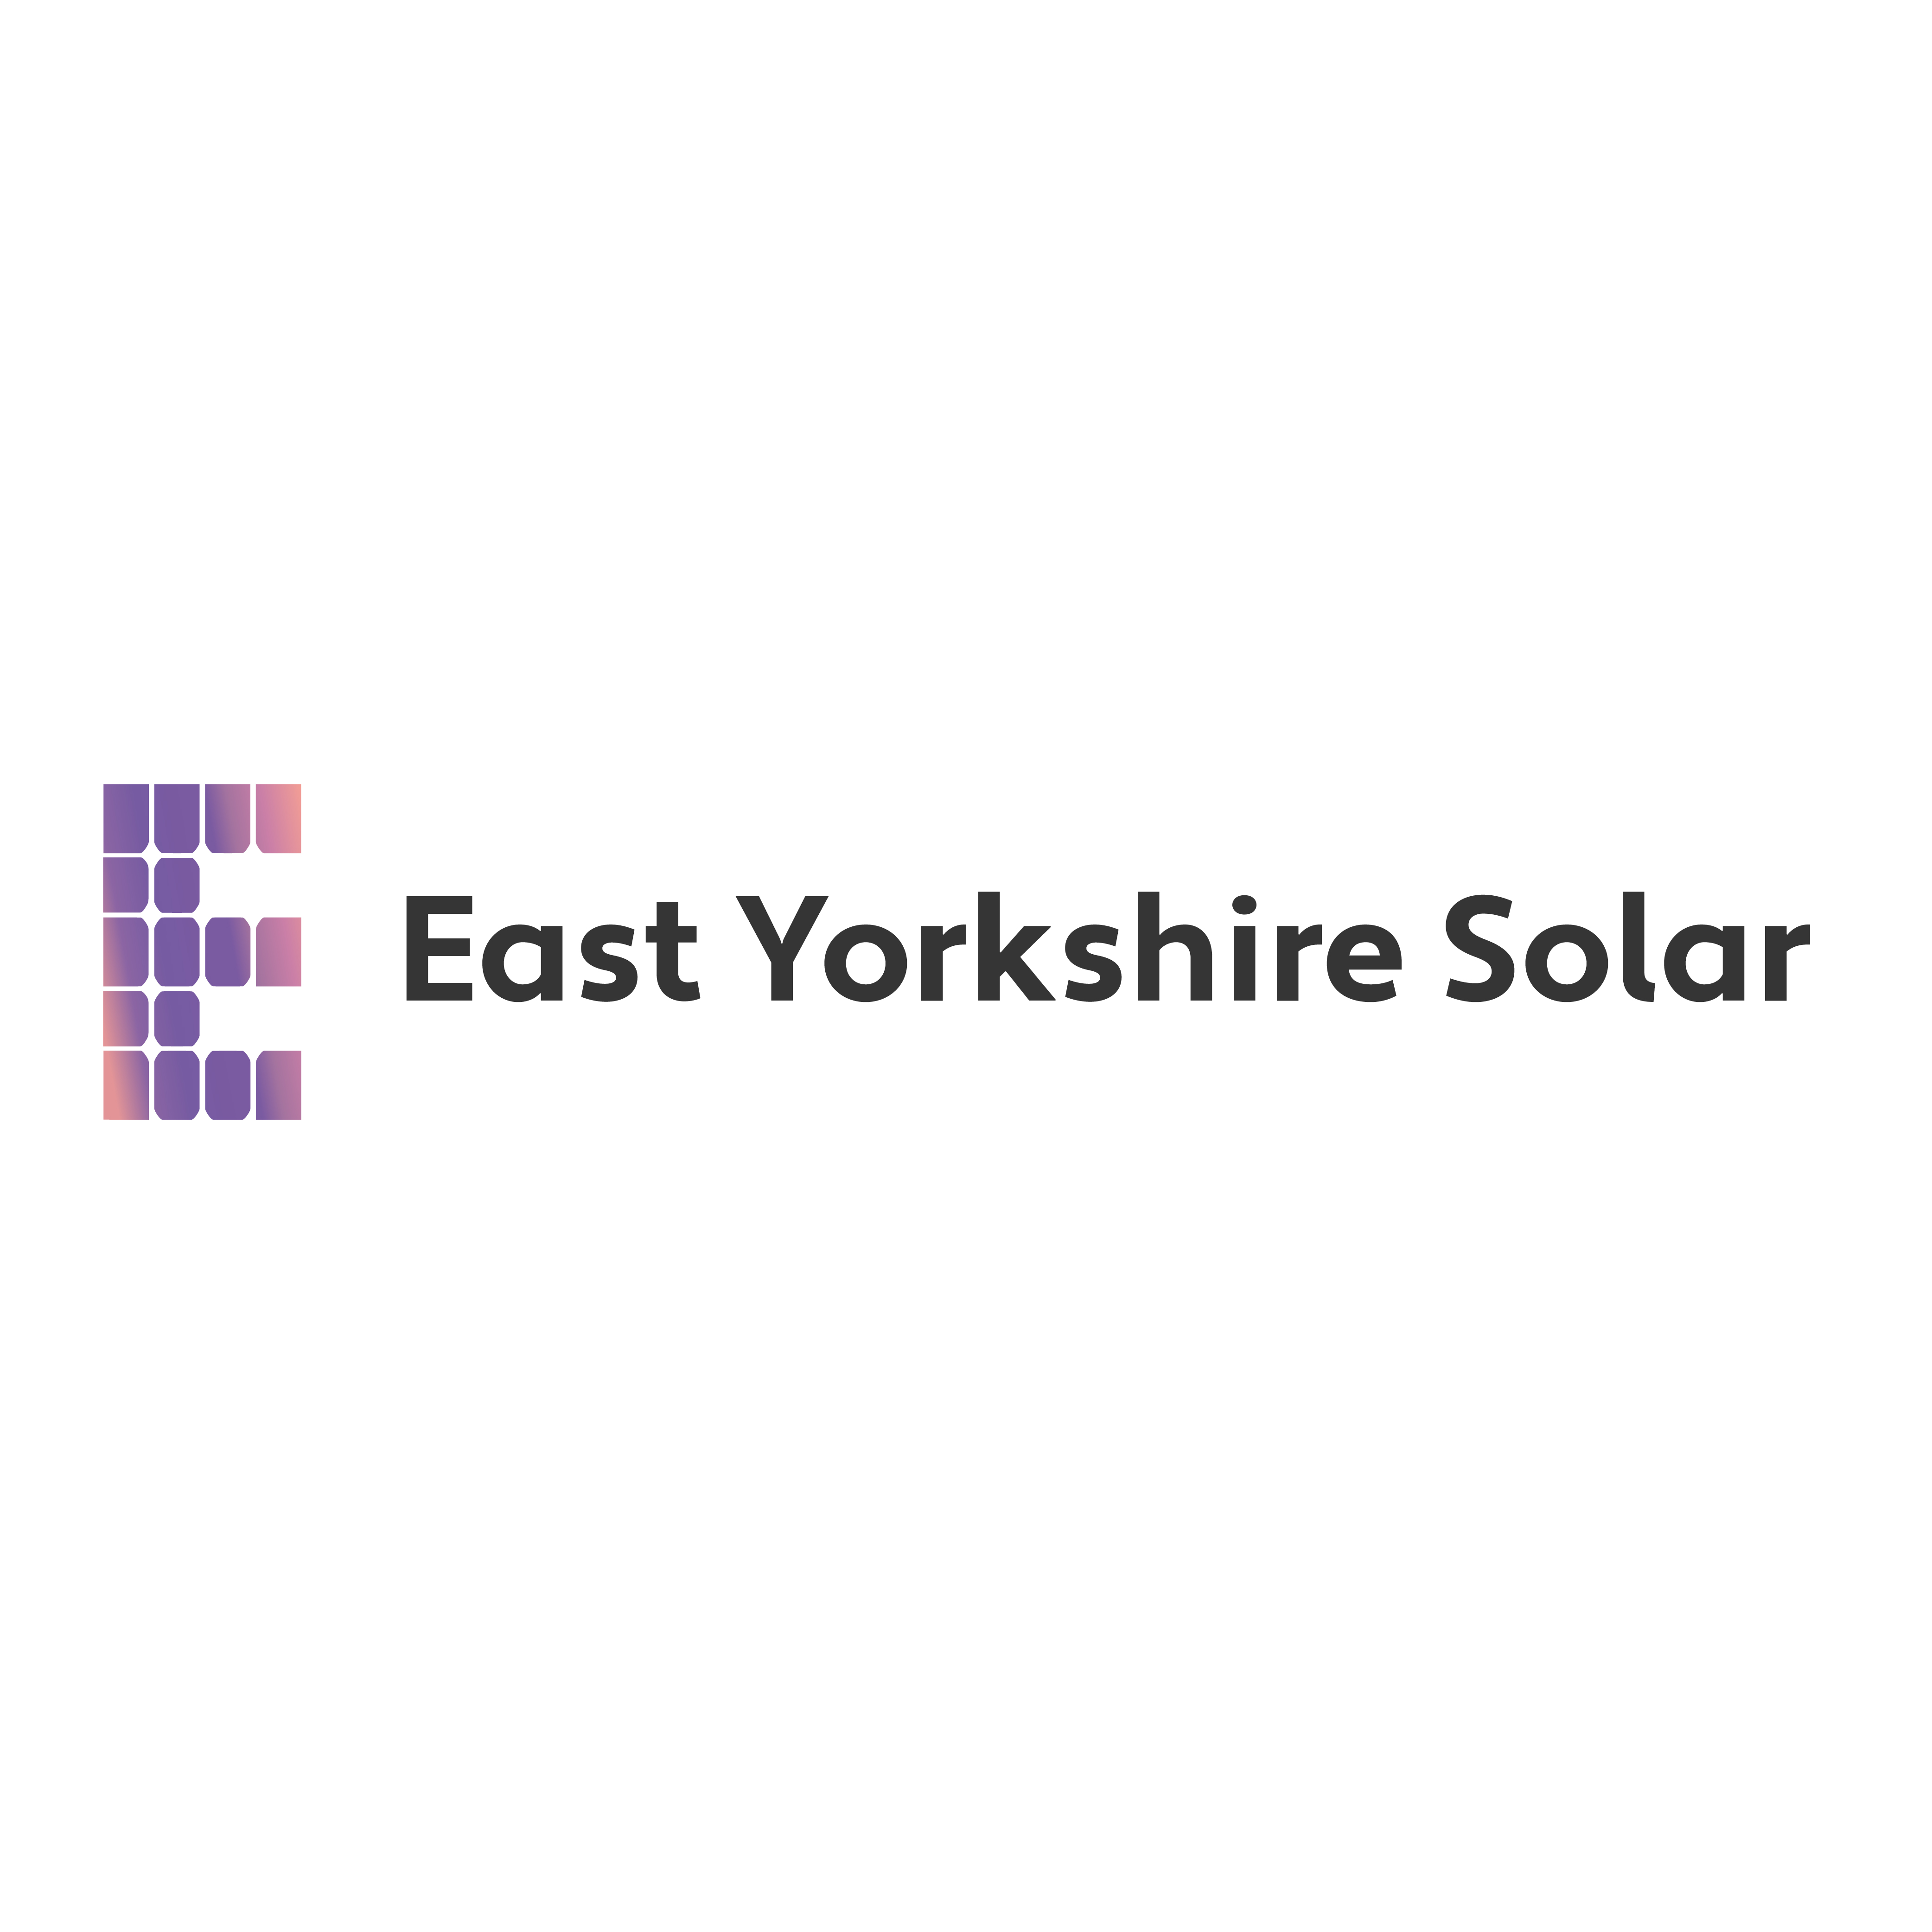 East Yorkshire Solar